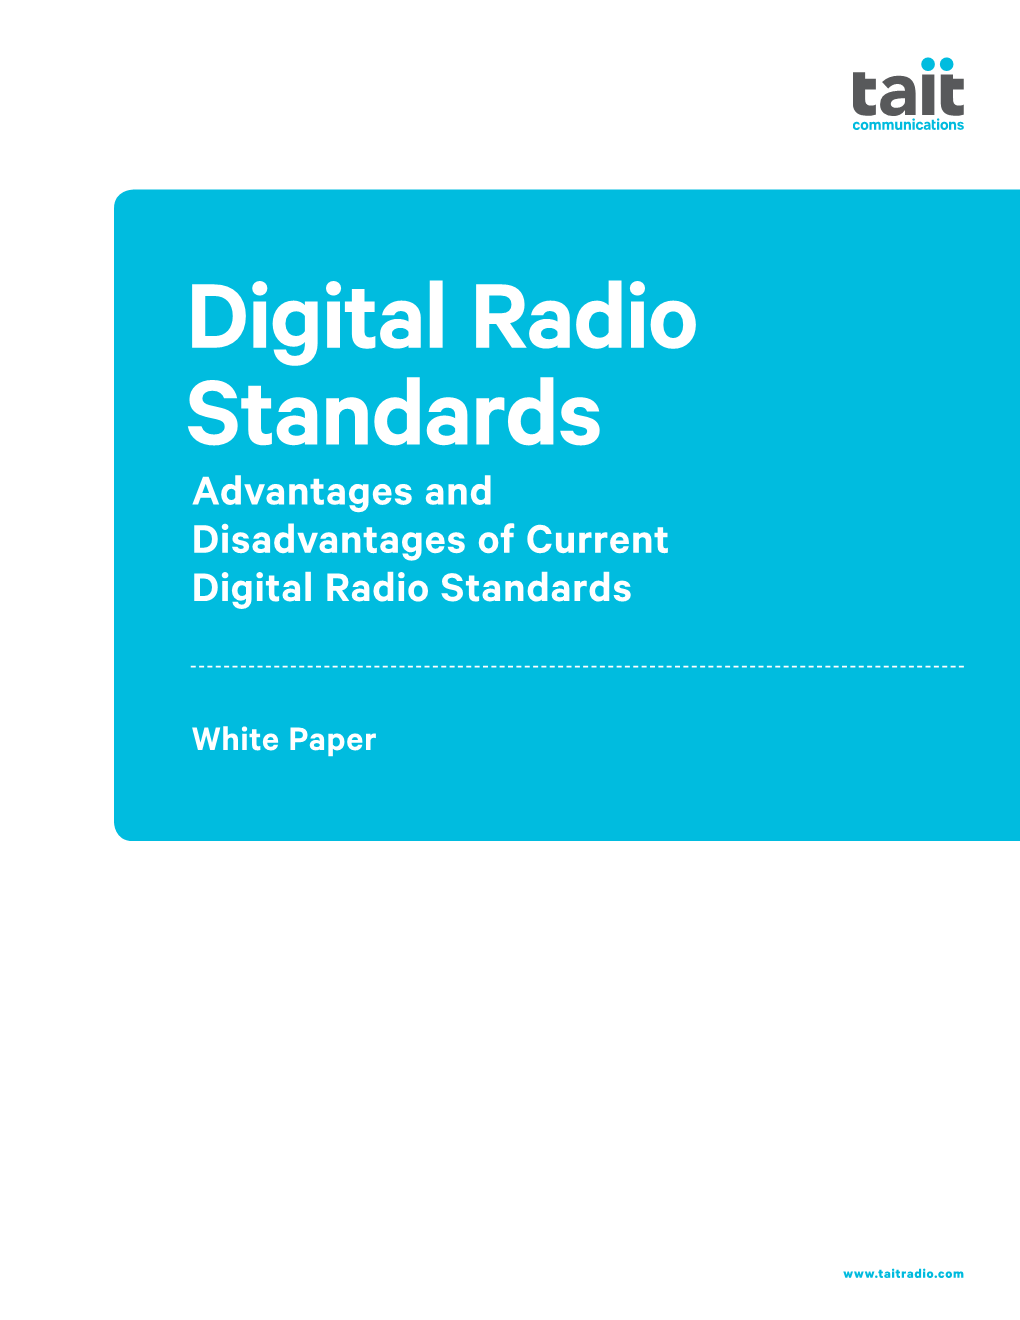 Digital Radio Standards Advantages and Disadvantages of Current Digital Radio Standards